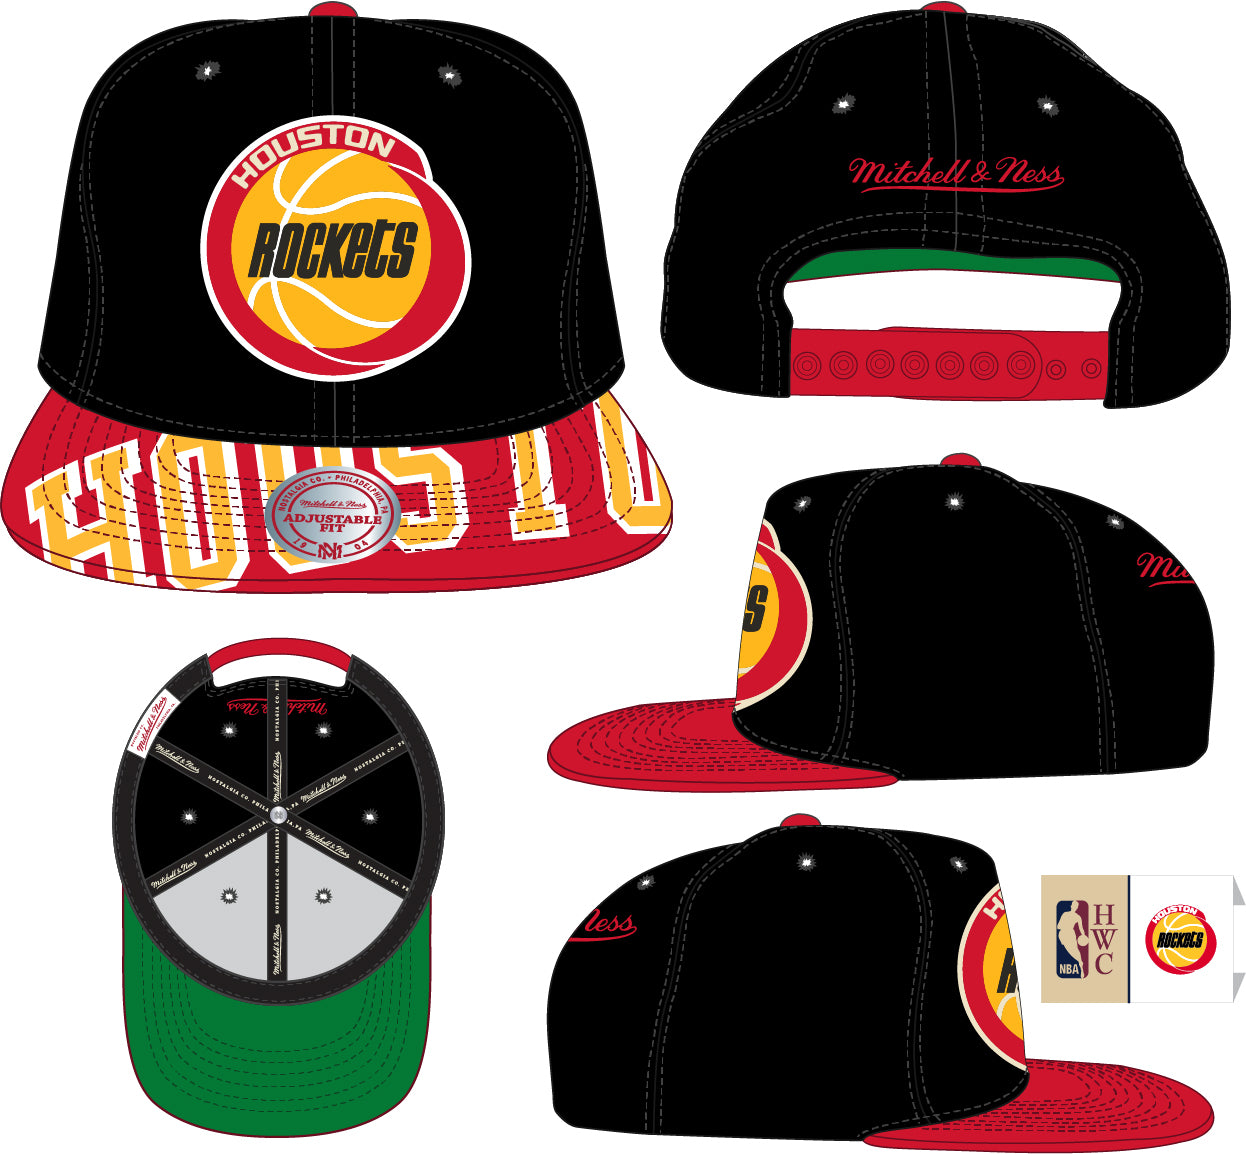 Men's Mitchell & Ness Black/Red Houston Rockets Hardwood Classics Snapshot Adjustable Snapback Hat